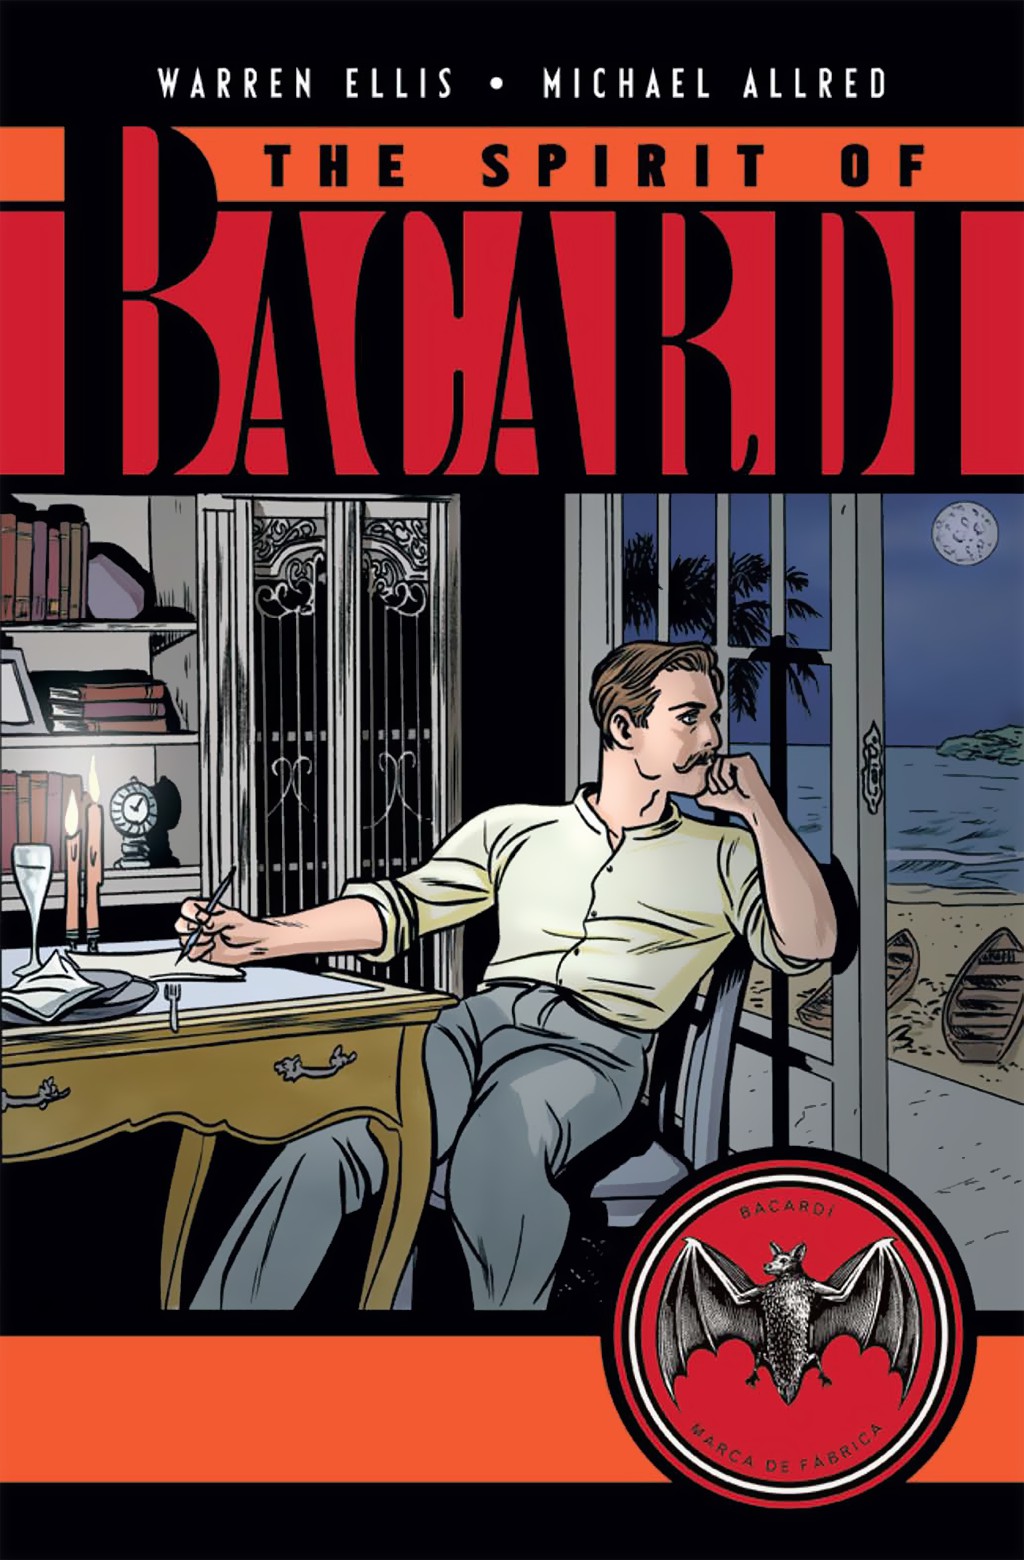 Read online The Spirit of BACARDÍ comic -  Issue # Full - 1